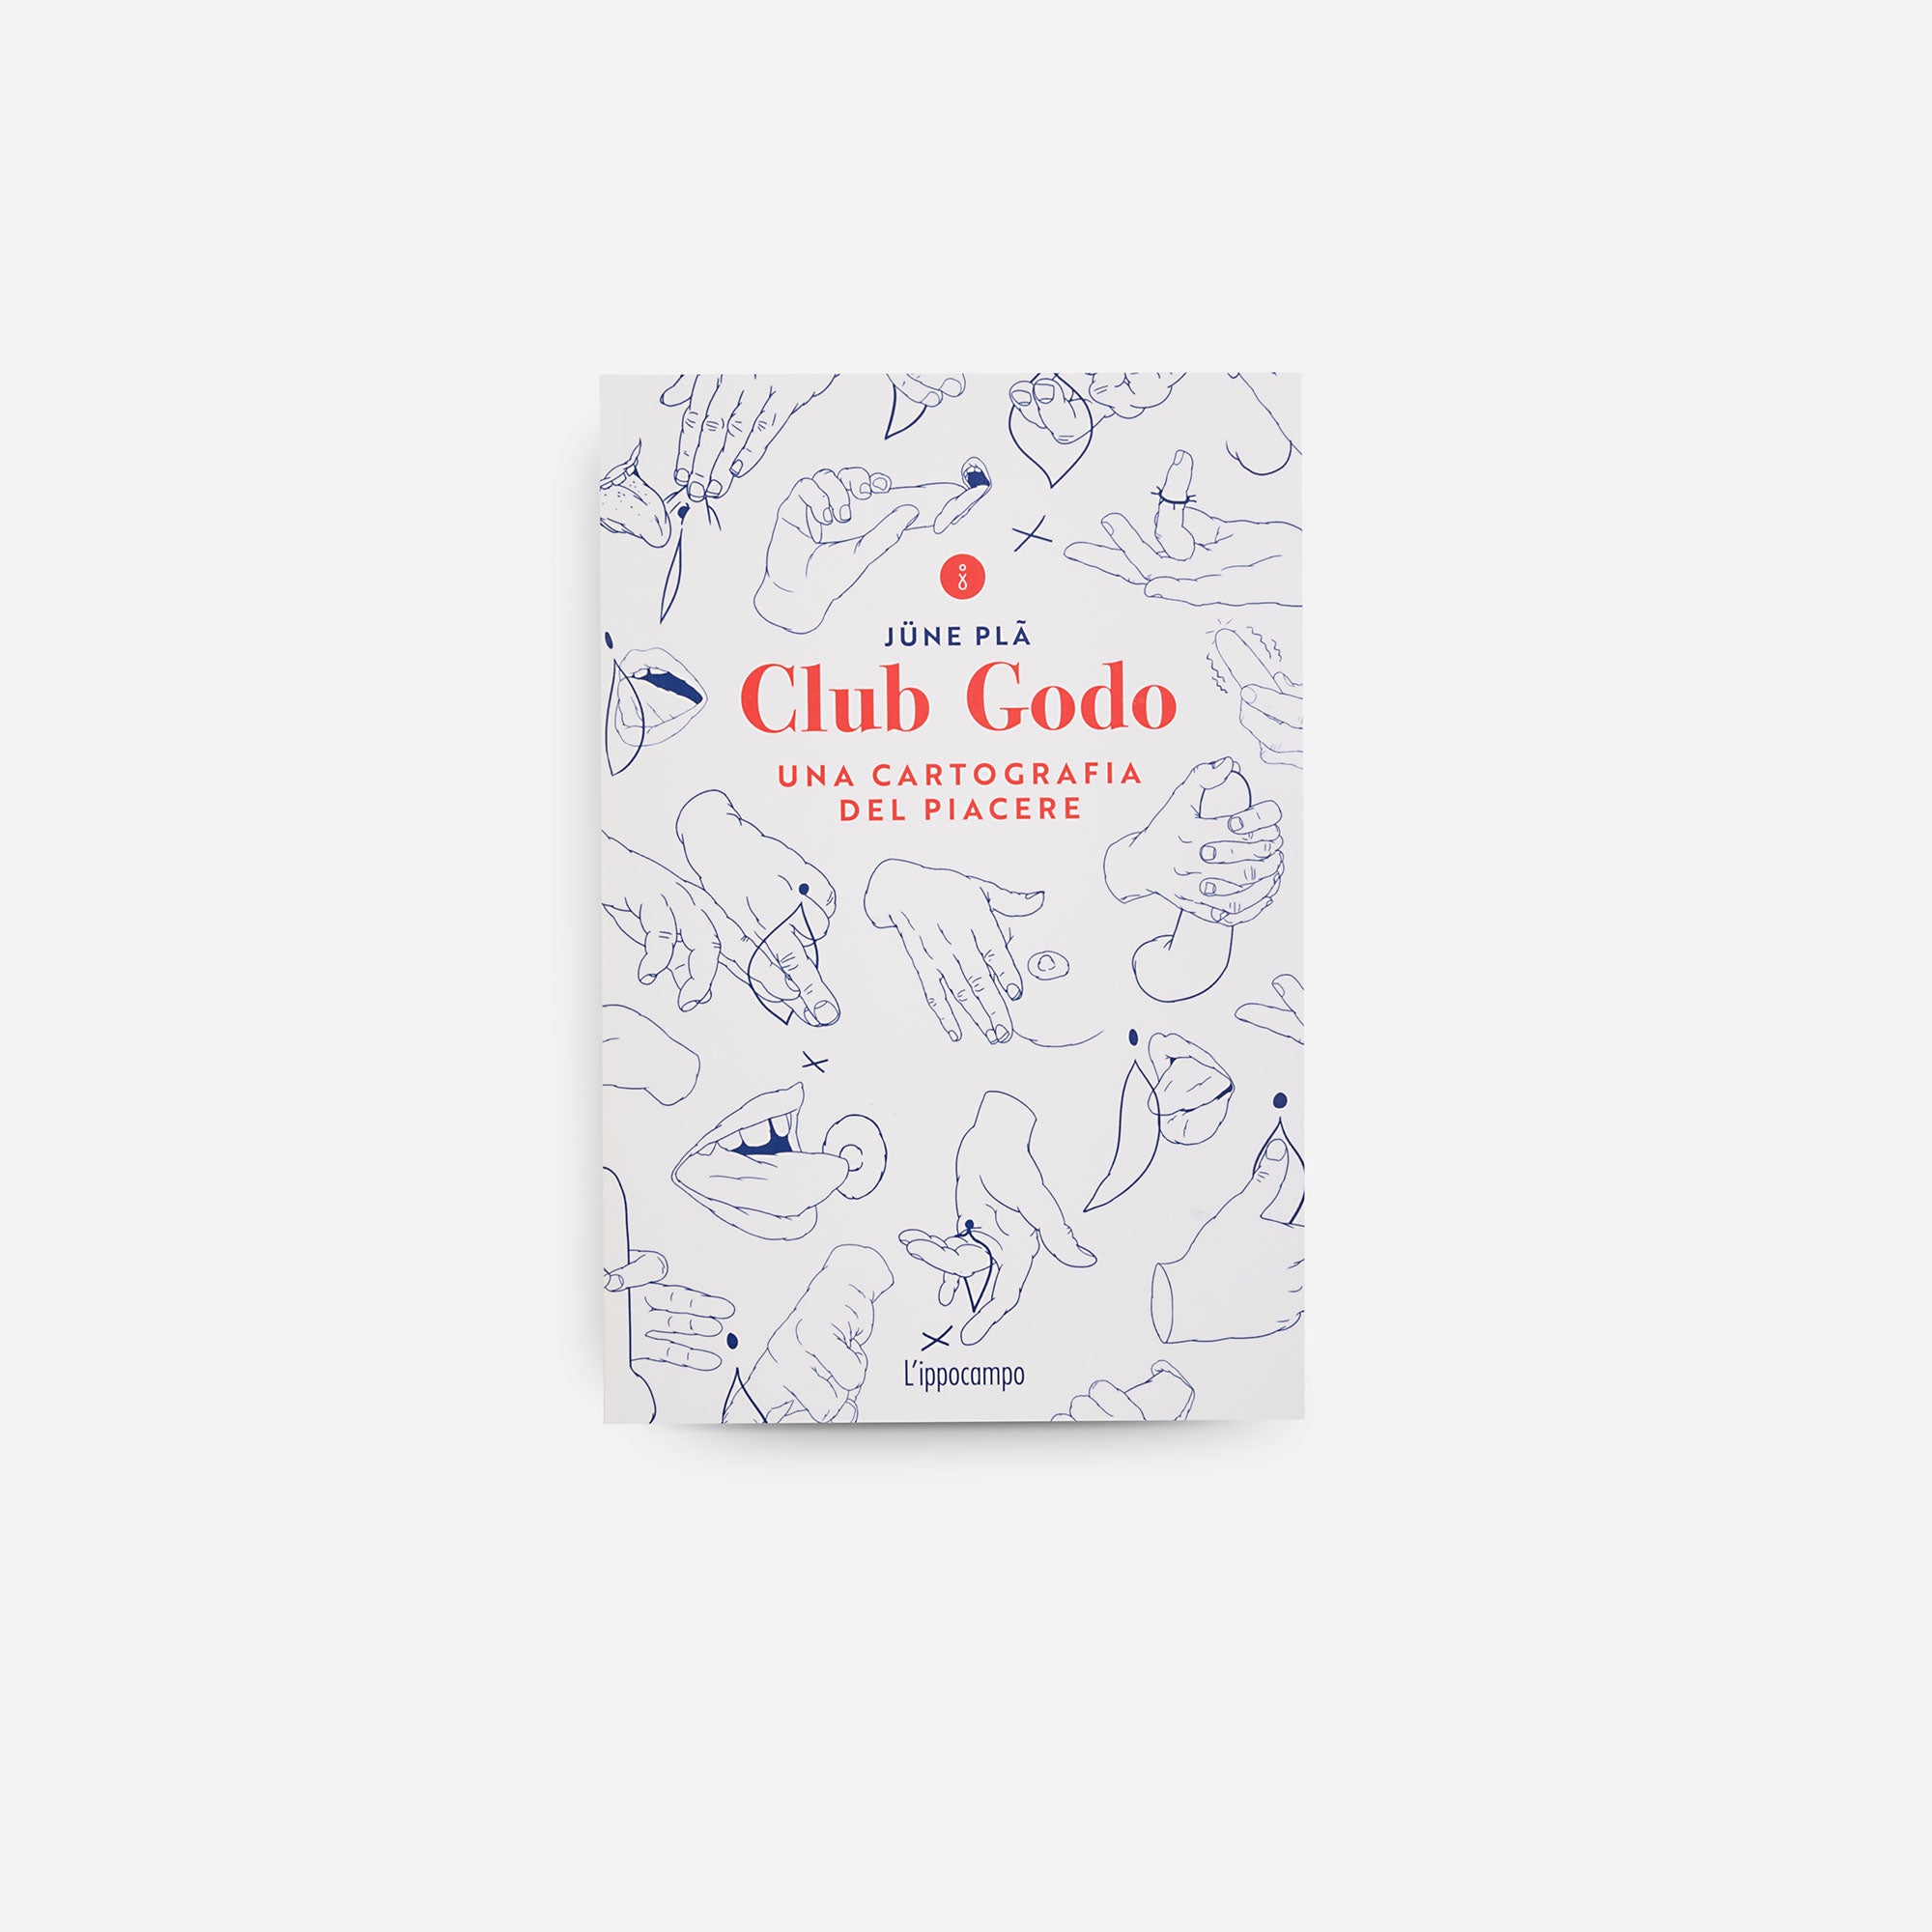 Club Godo - Una cartografia del piacere